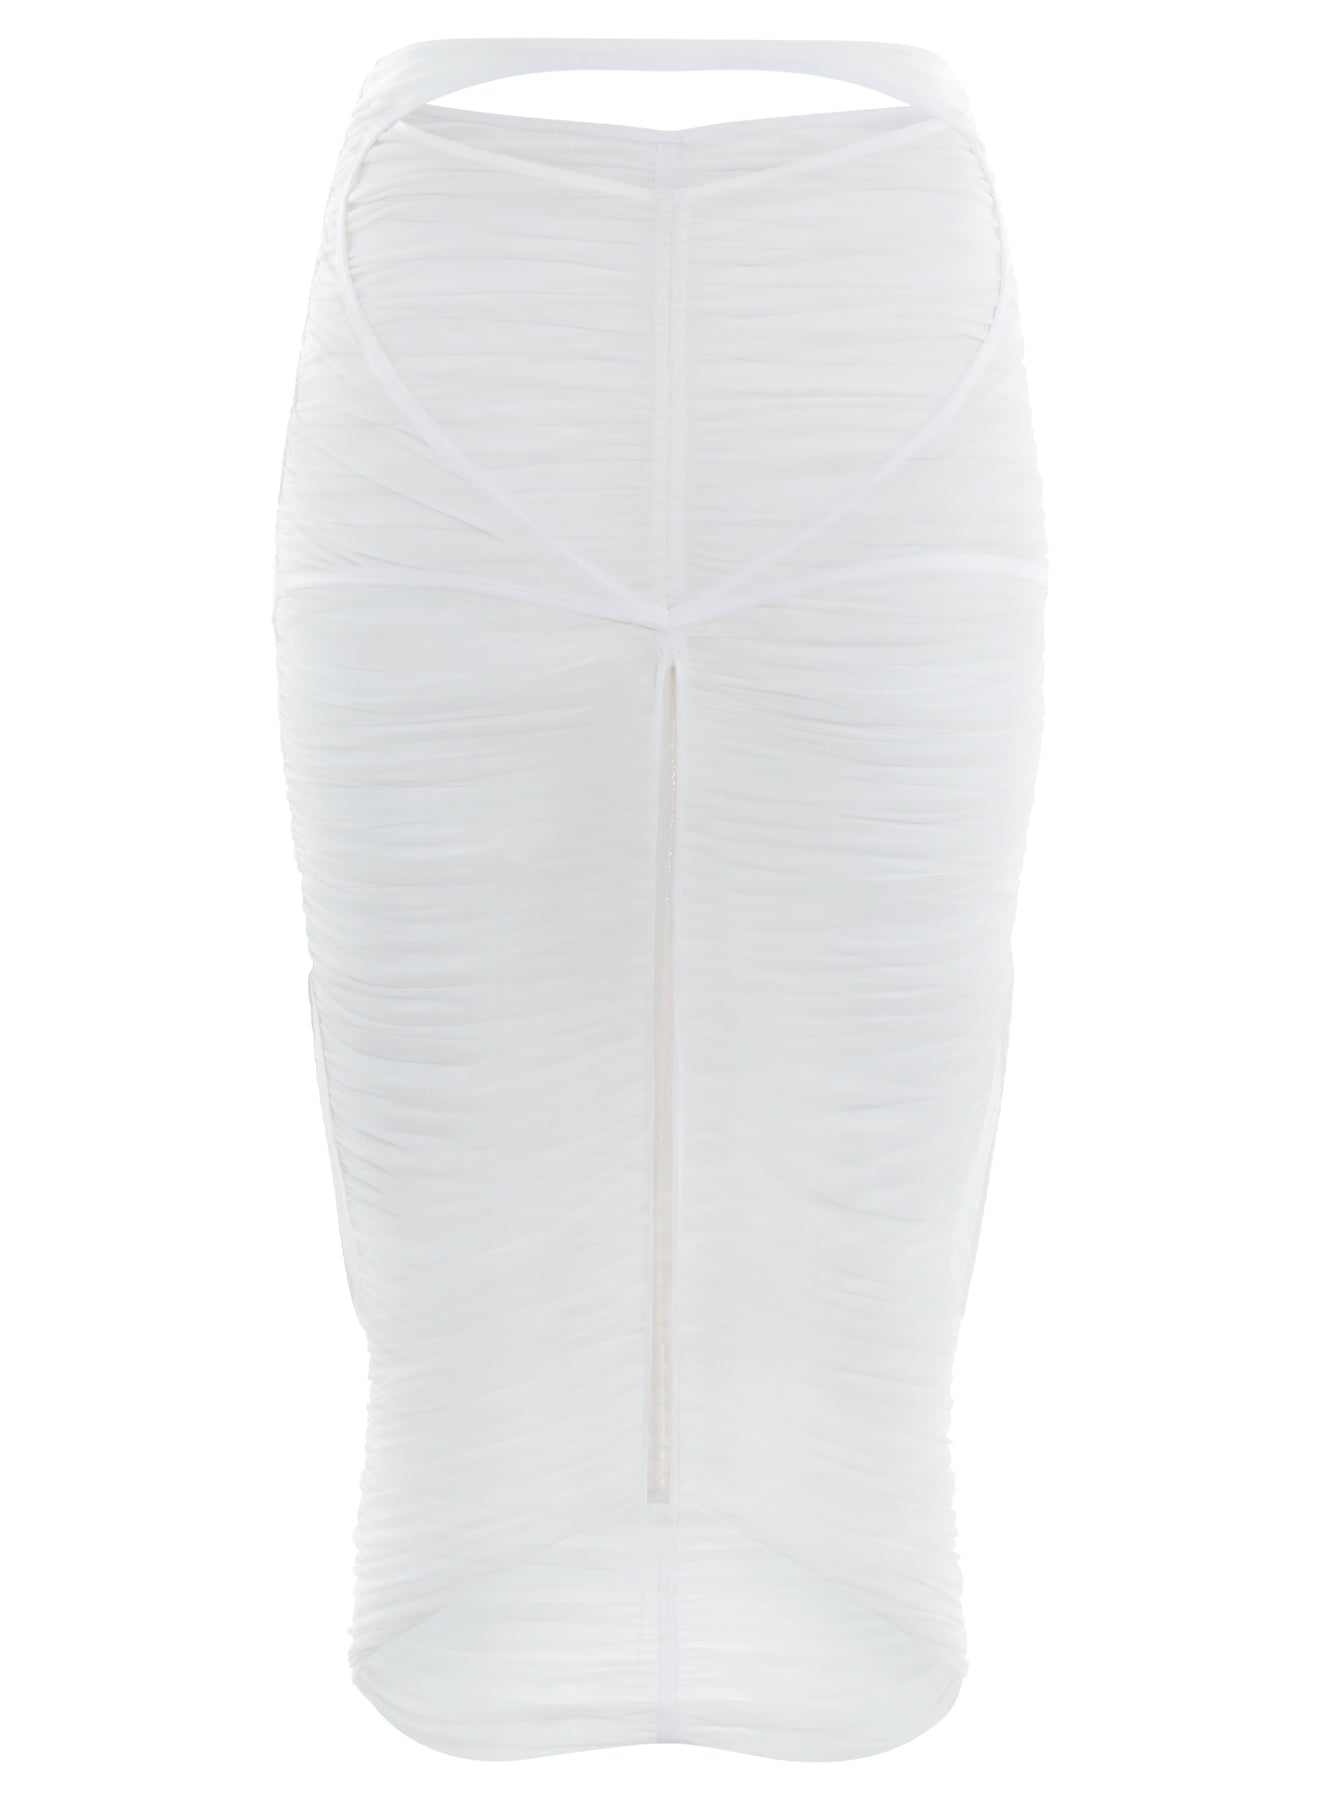 white ruched mesh skirt